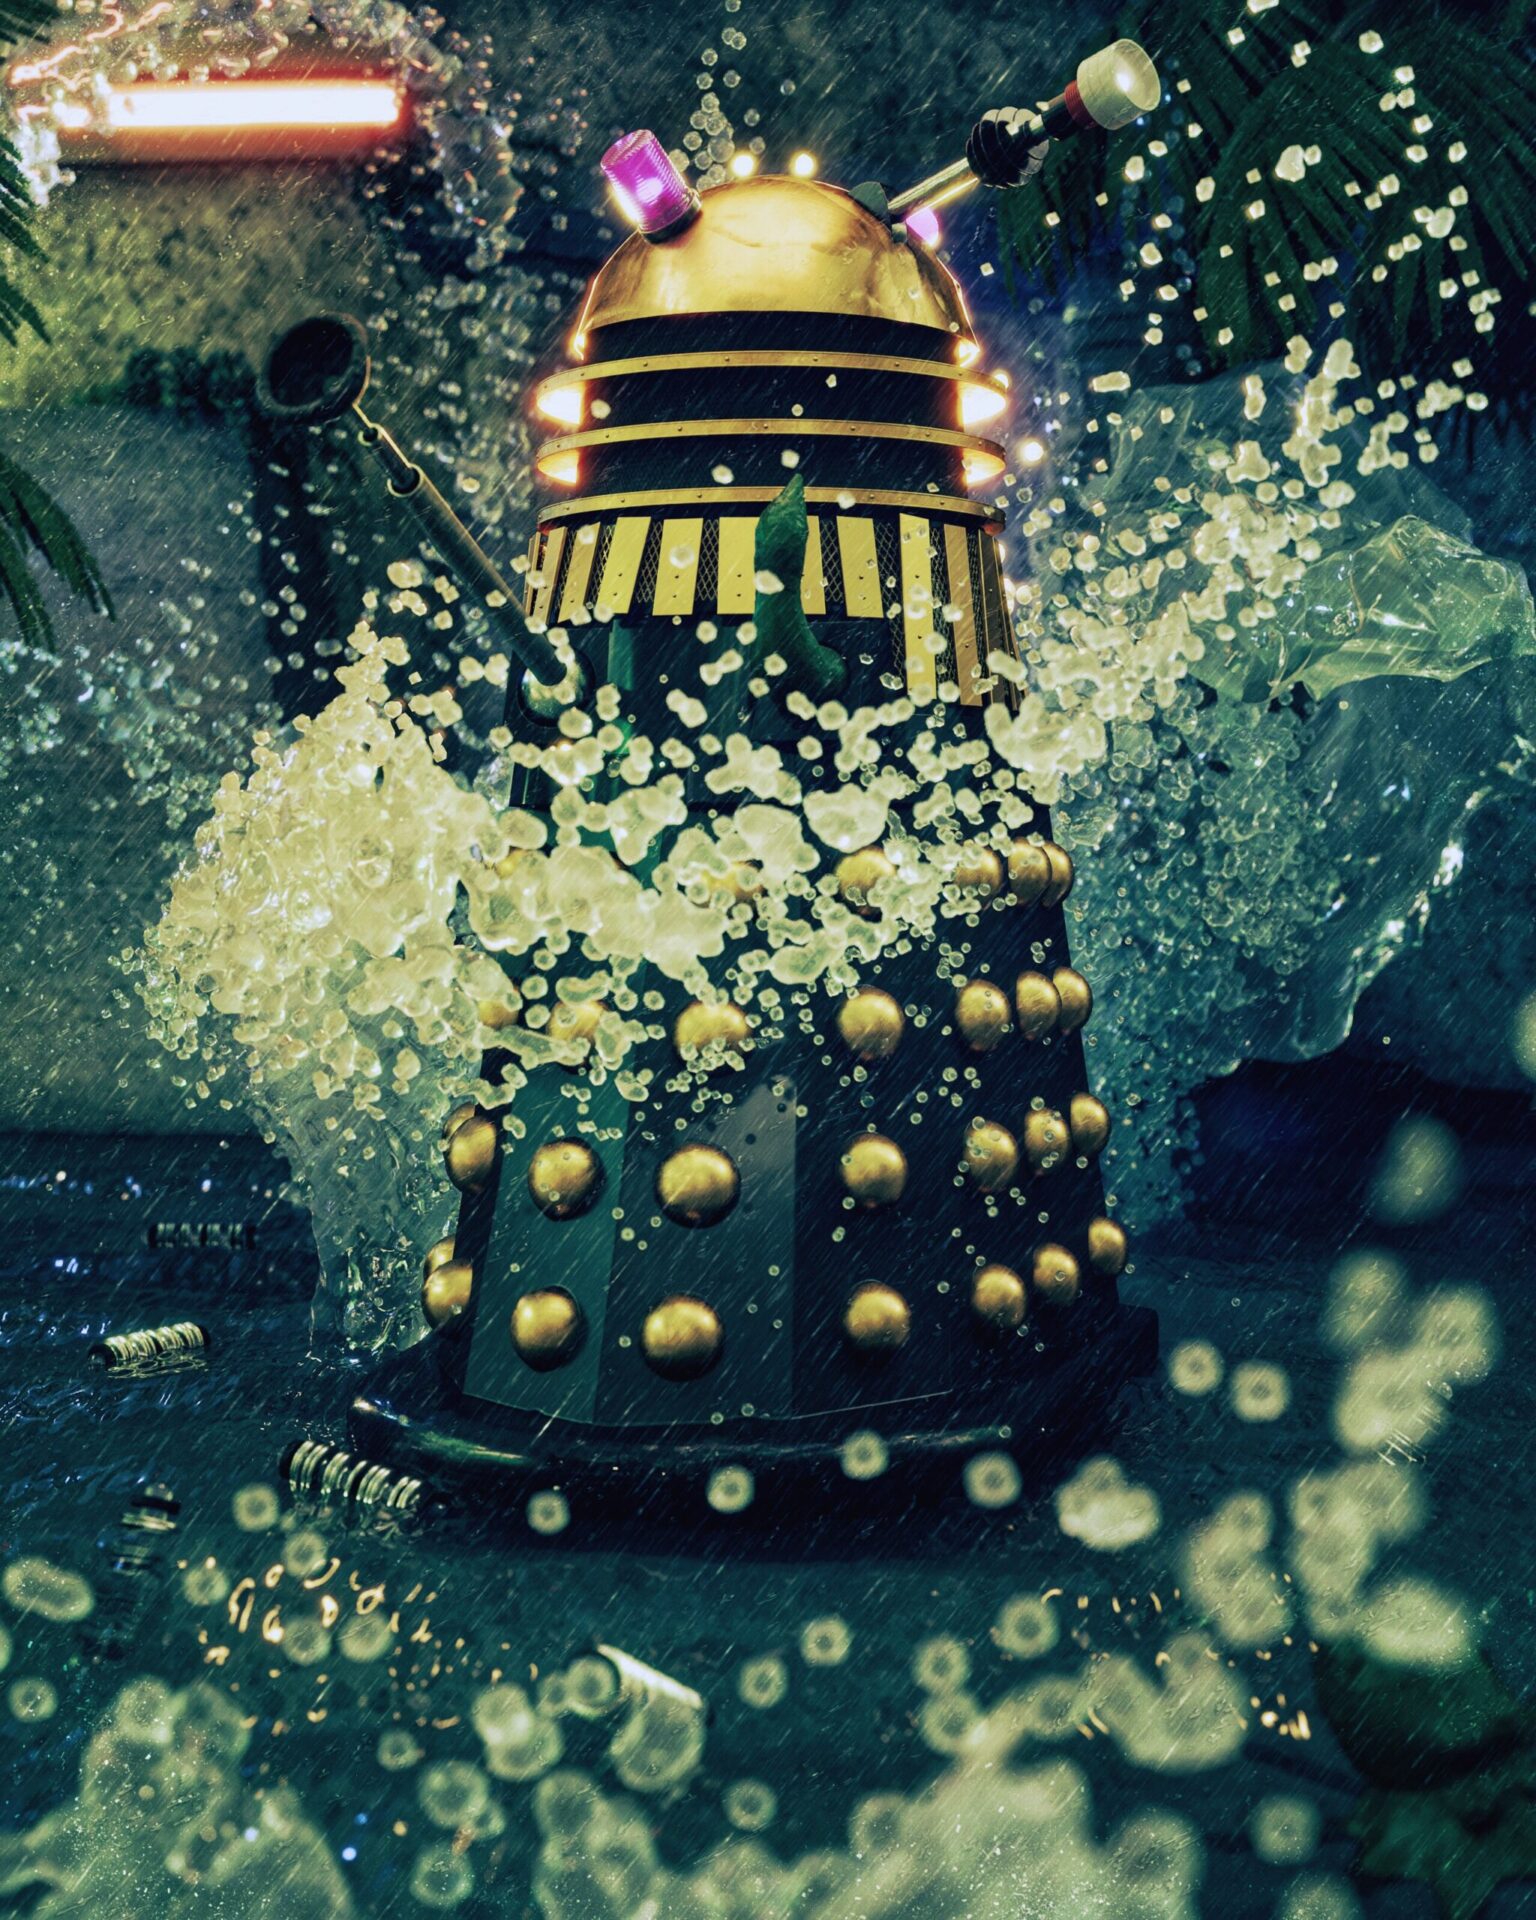 Big Finish Daleks by Phil Shaw